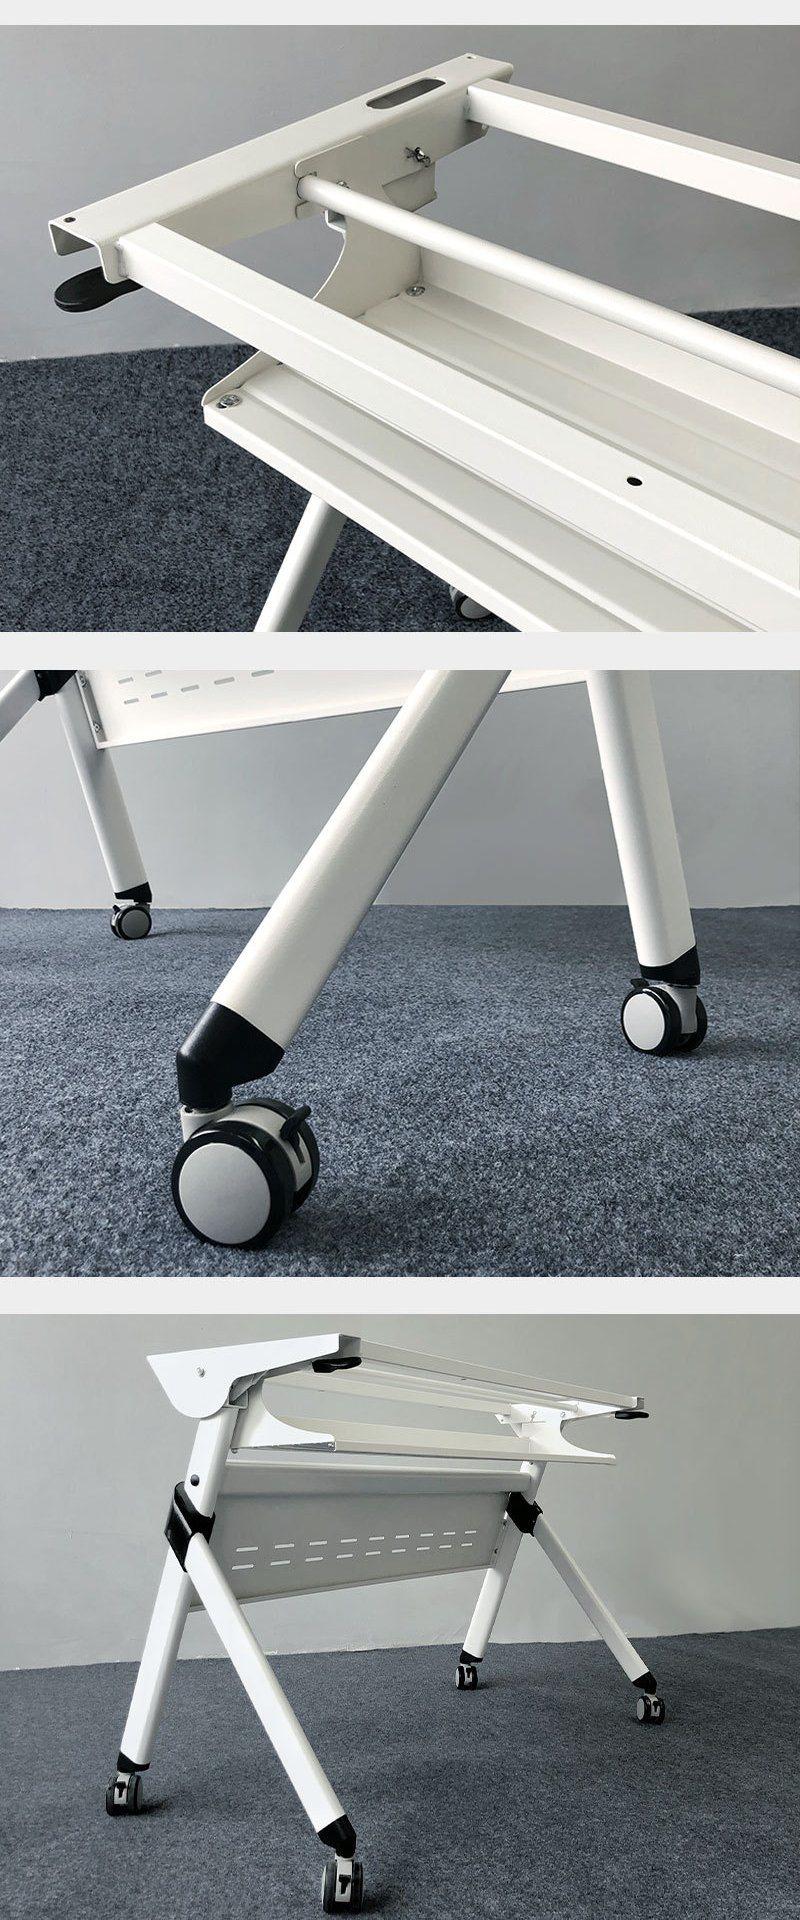 2022 New Design Hot Sale Desk with Wheels Office Furniture Training Desk Study Desk